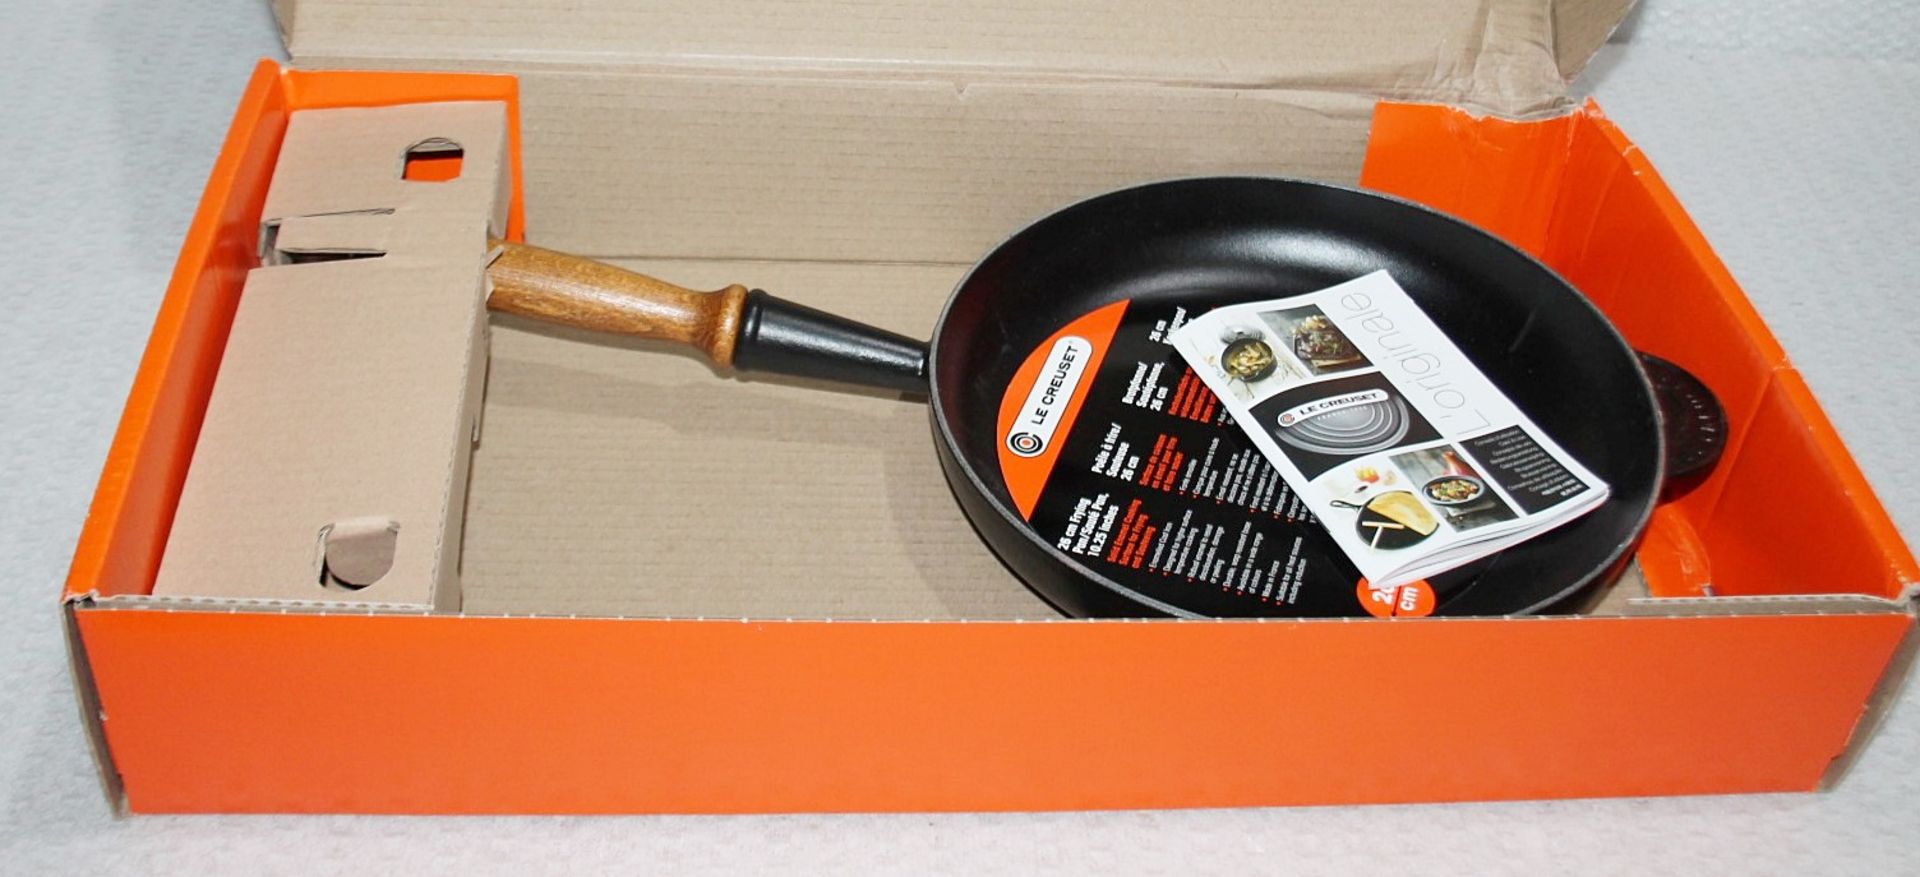 1 x LE CREUSET Satin Black Wooden Handle Frying Pan (26cm) - Original Price £170.00 - Boxed Stock - Image 4 of 9